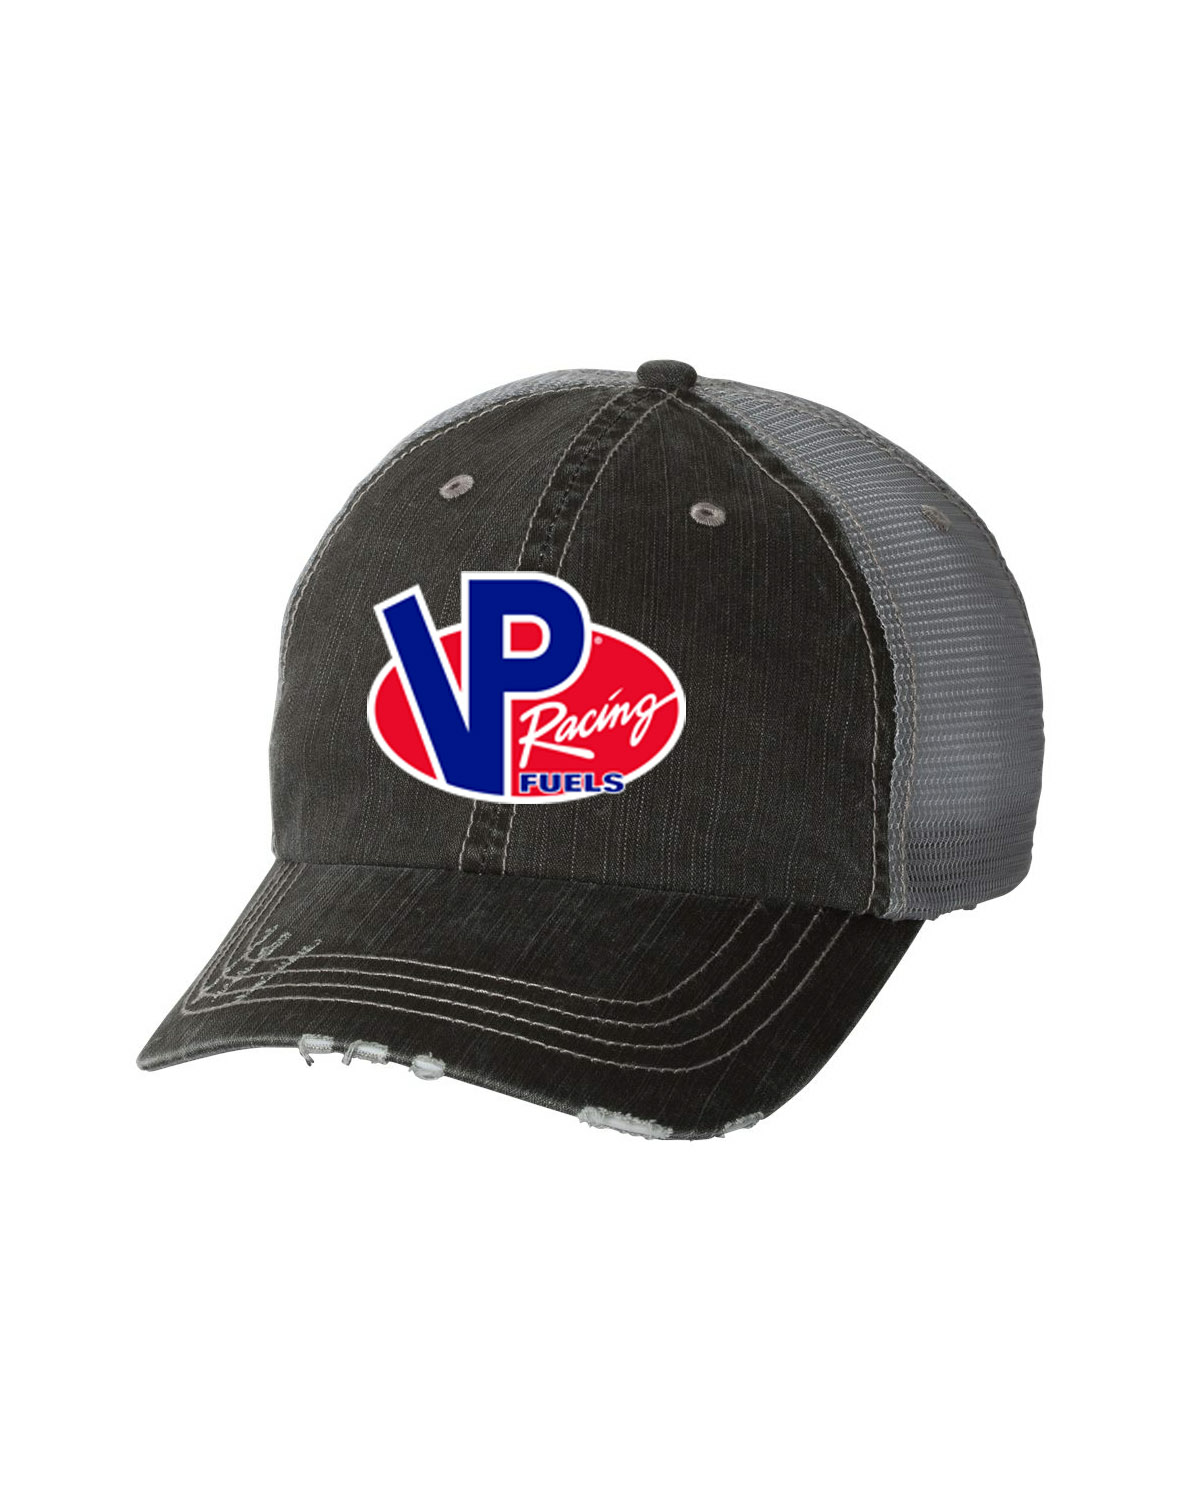 VP Racing Fuels Weathered Hat